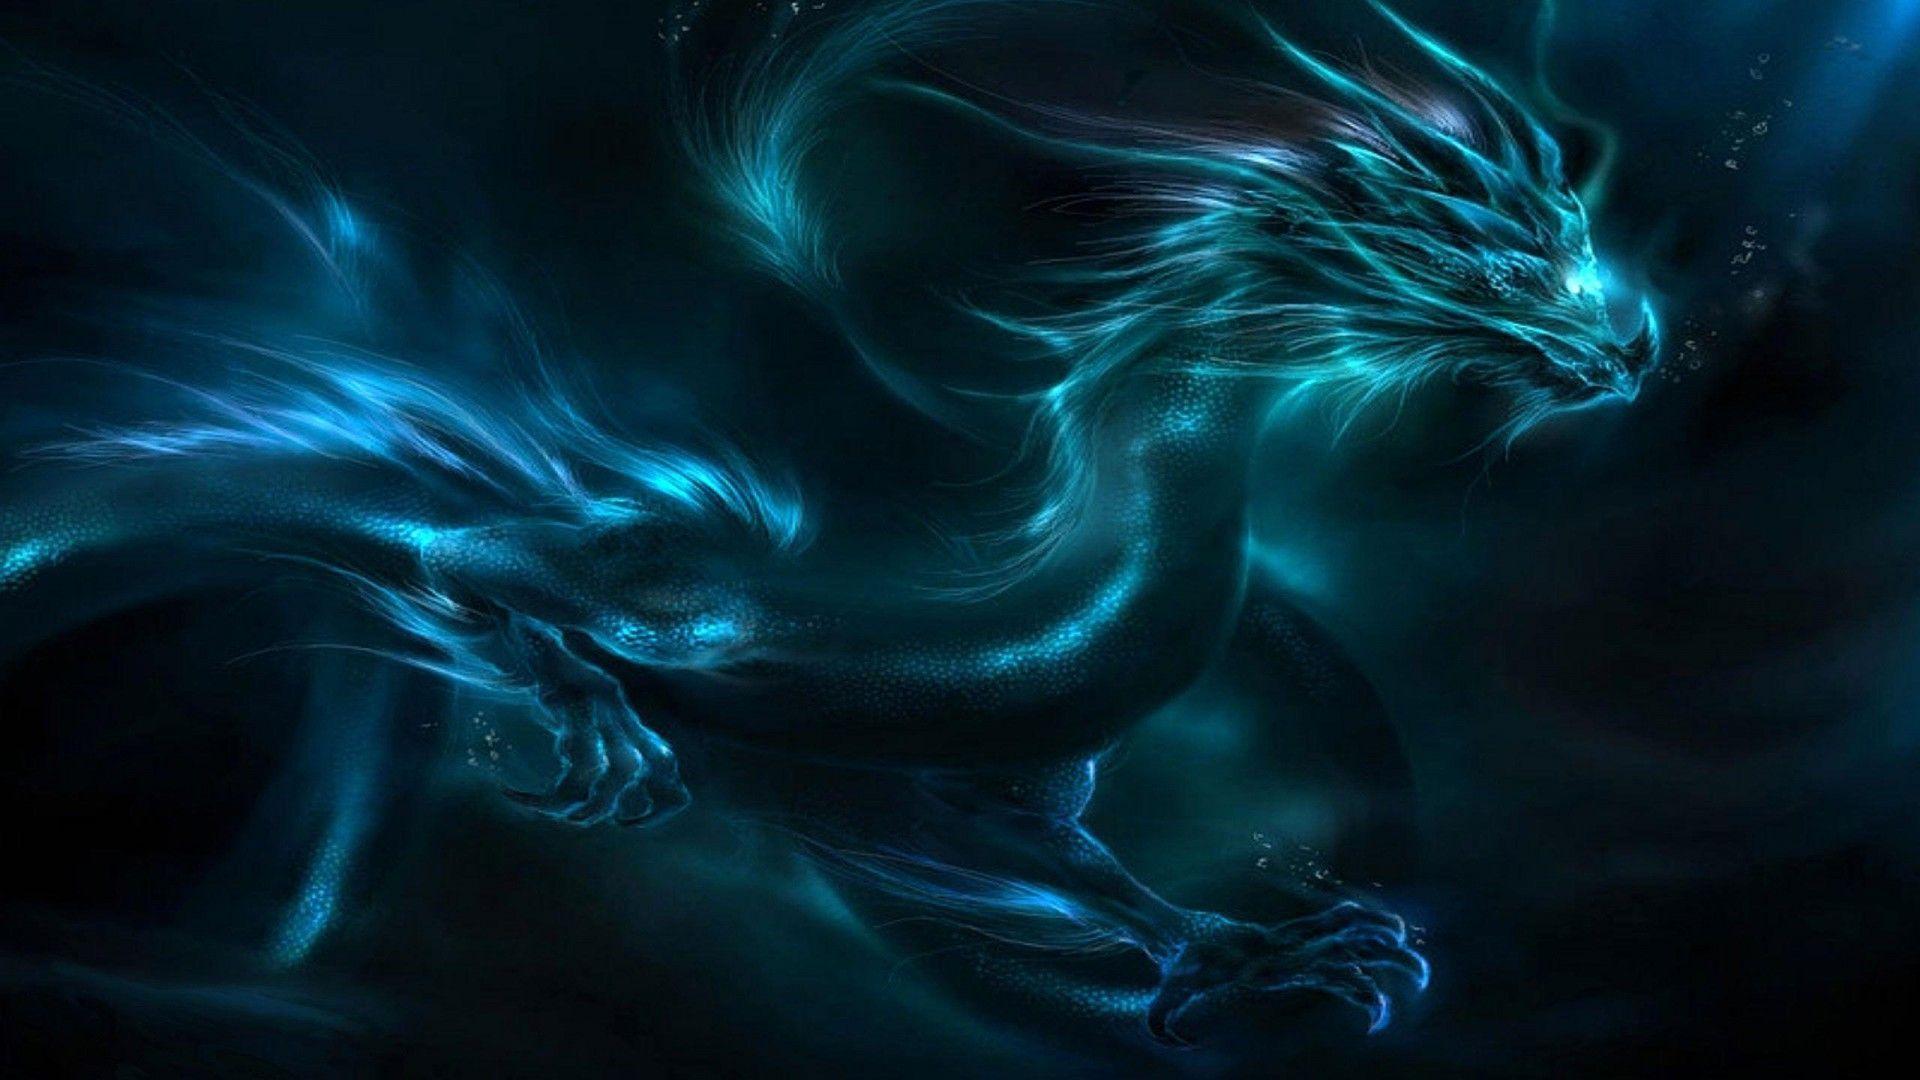 Blue Dragon Wallpaper HD. Dragon picture, Fantasy dragon, Blue